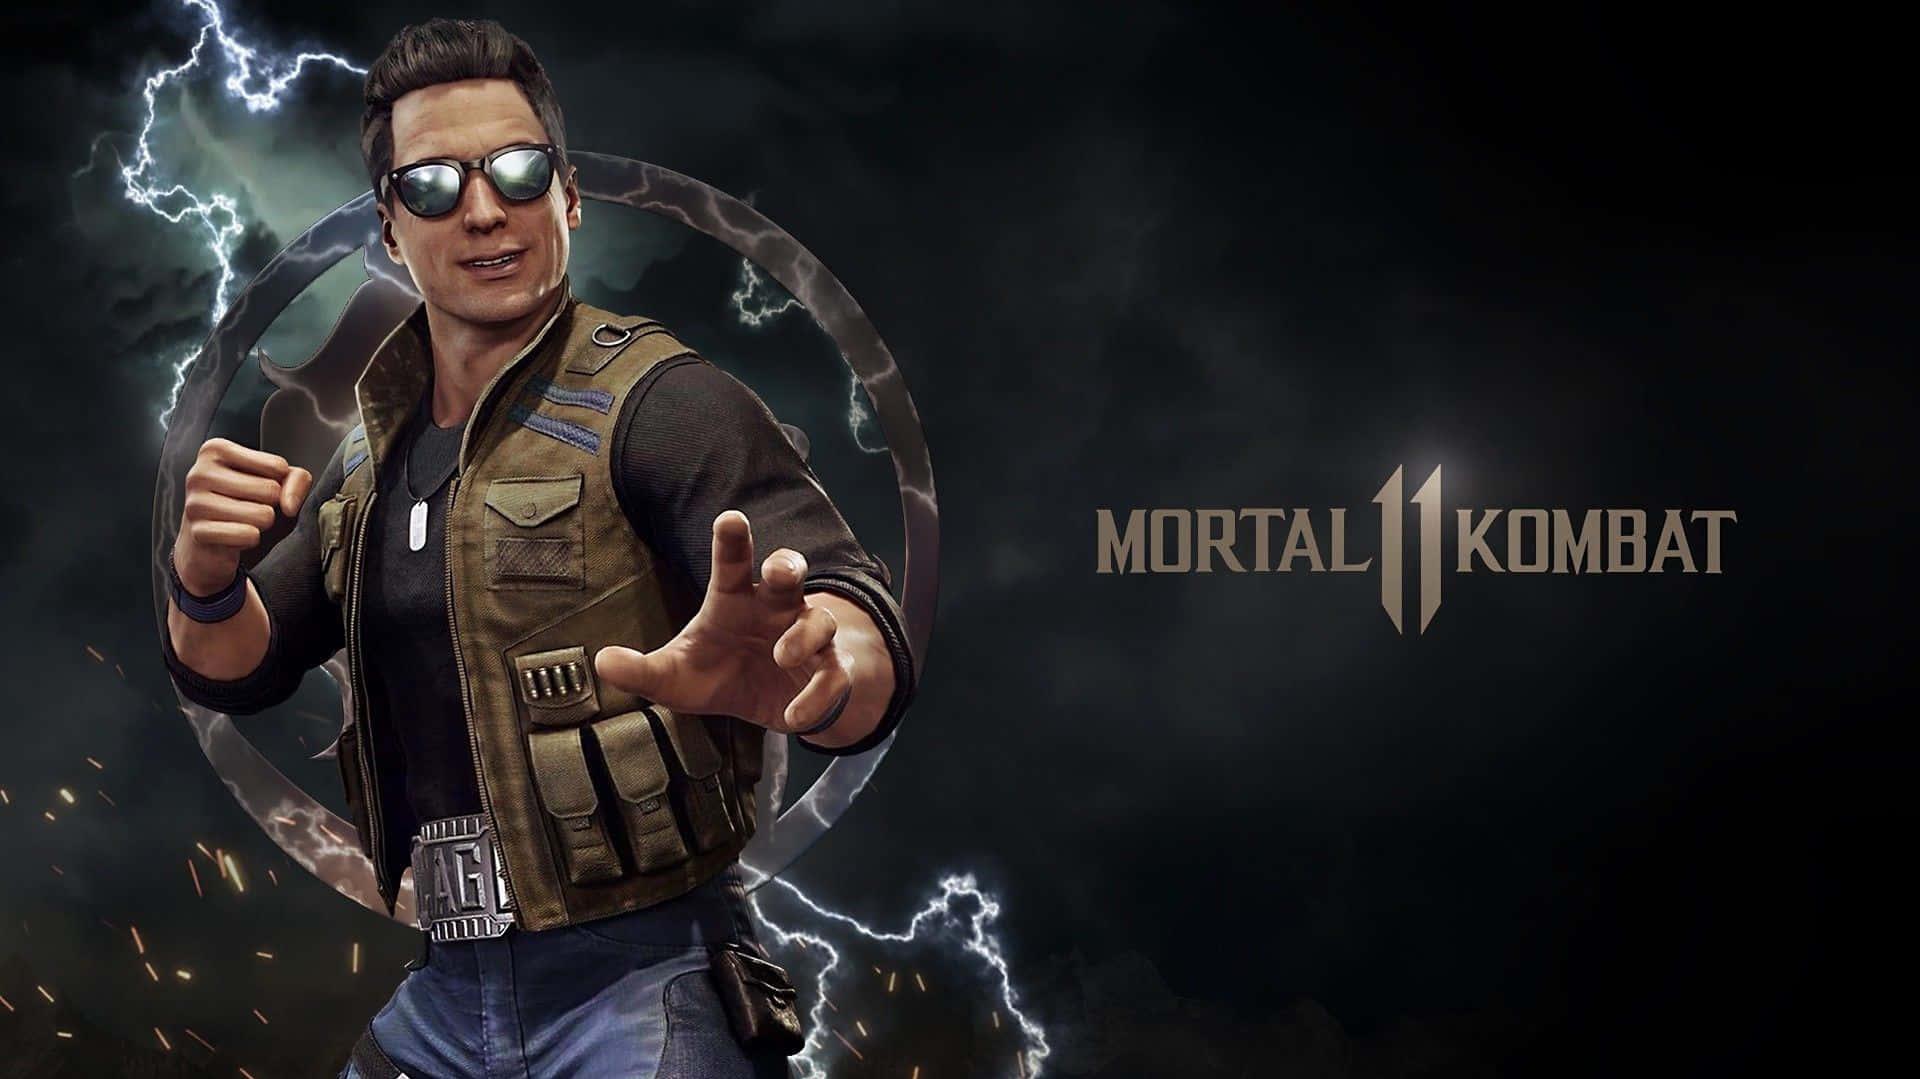 Download Mortal Kombat Legend Johnny Cage in Action Wallpaper